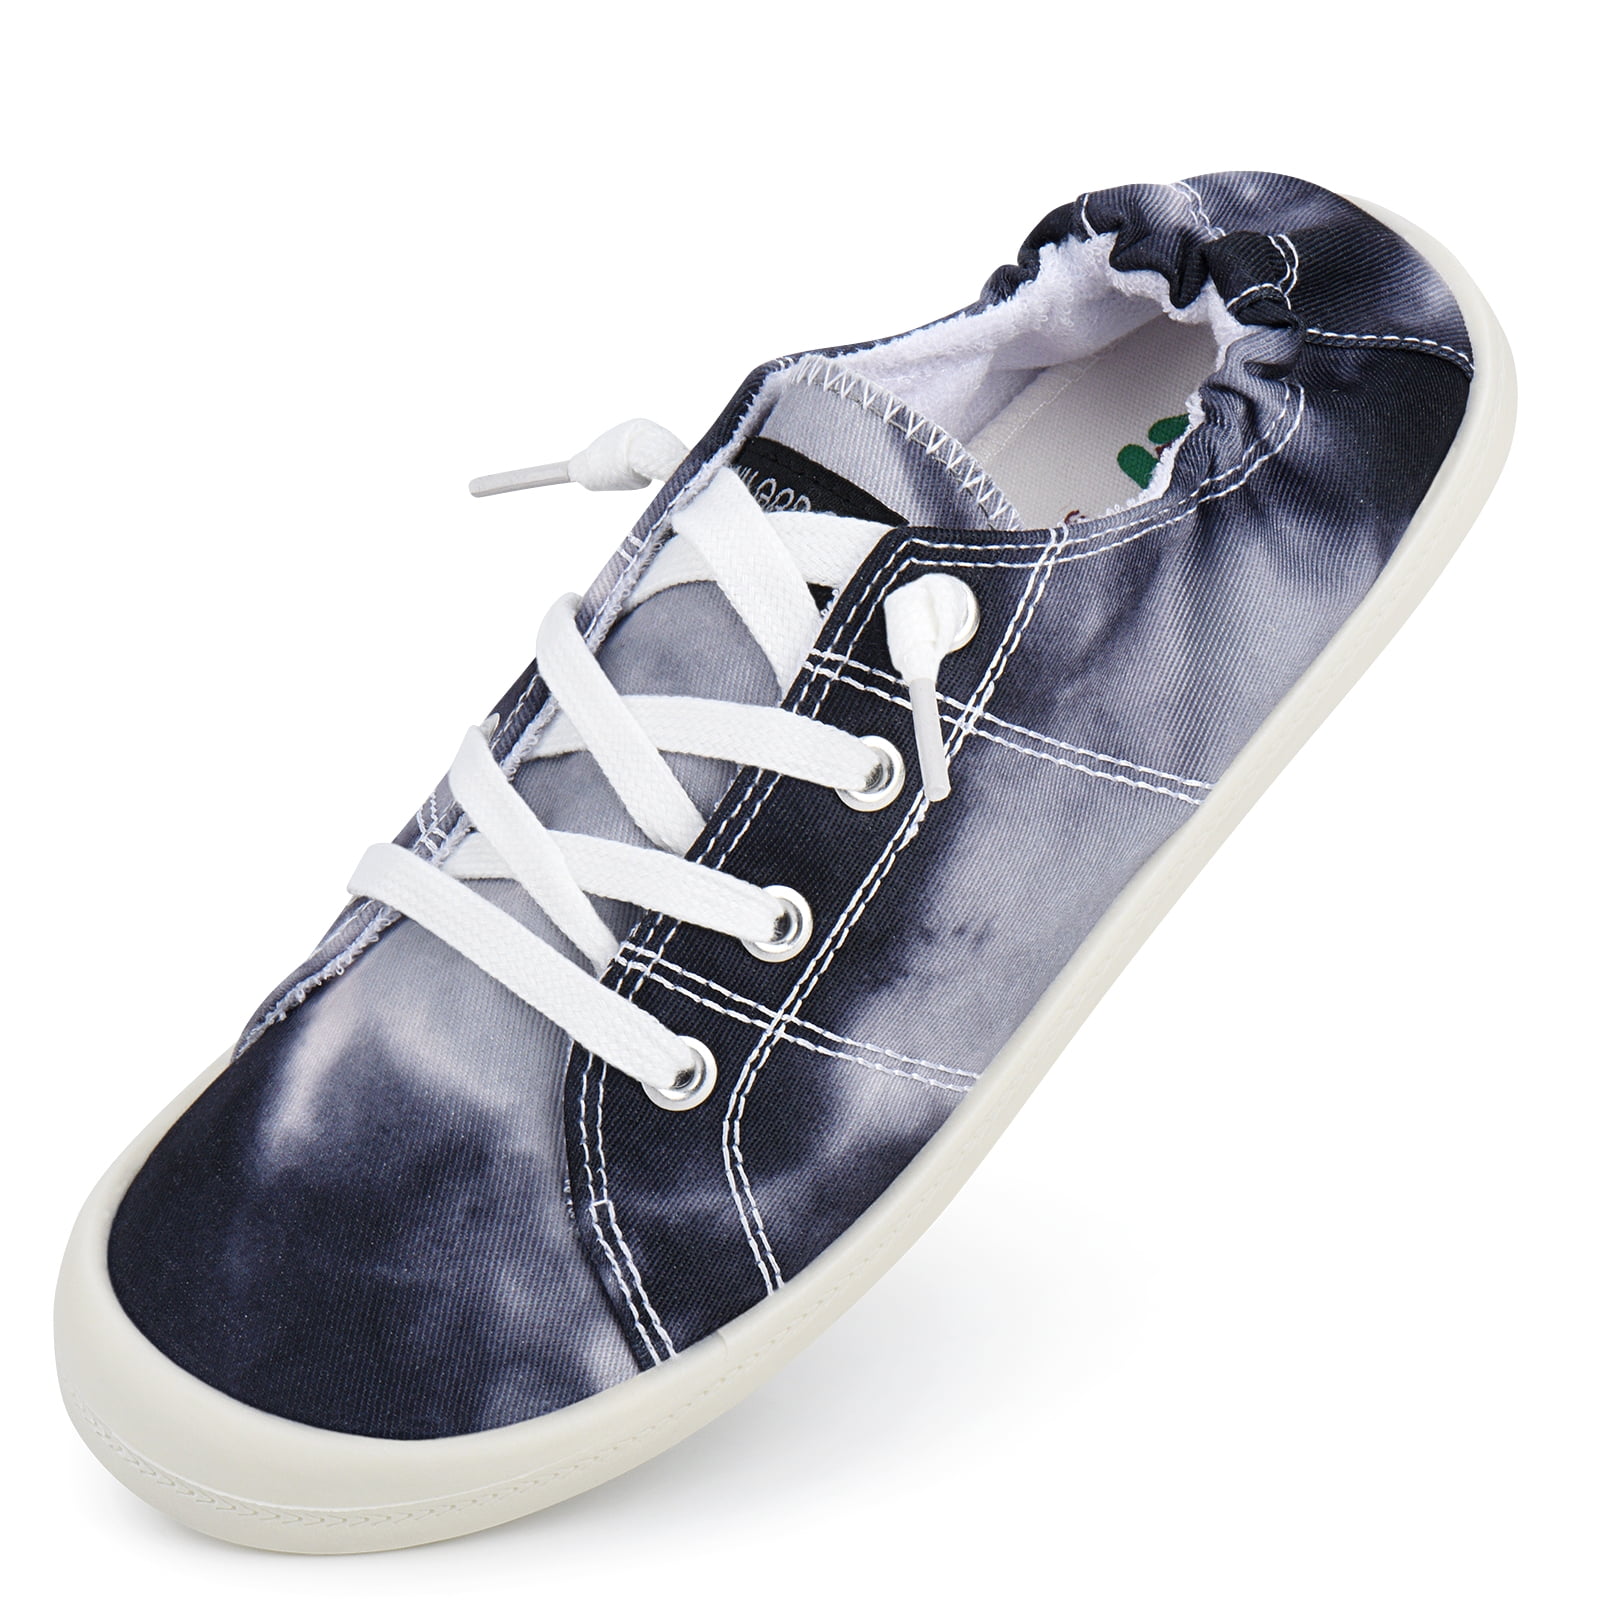 JENN ARDOR Women's Walking Shoes Slip On Lightweight Athletic Comfort Sneakers